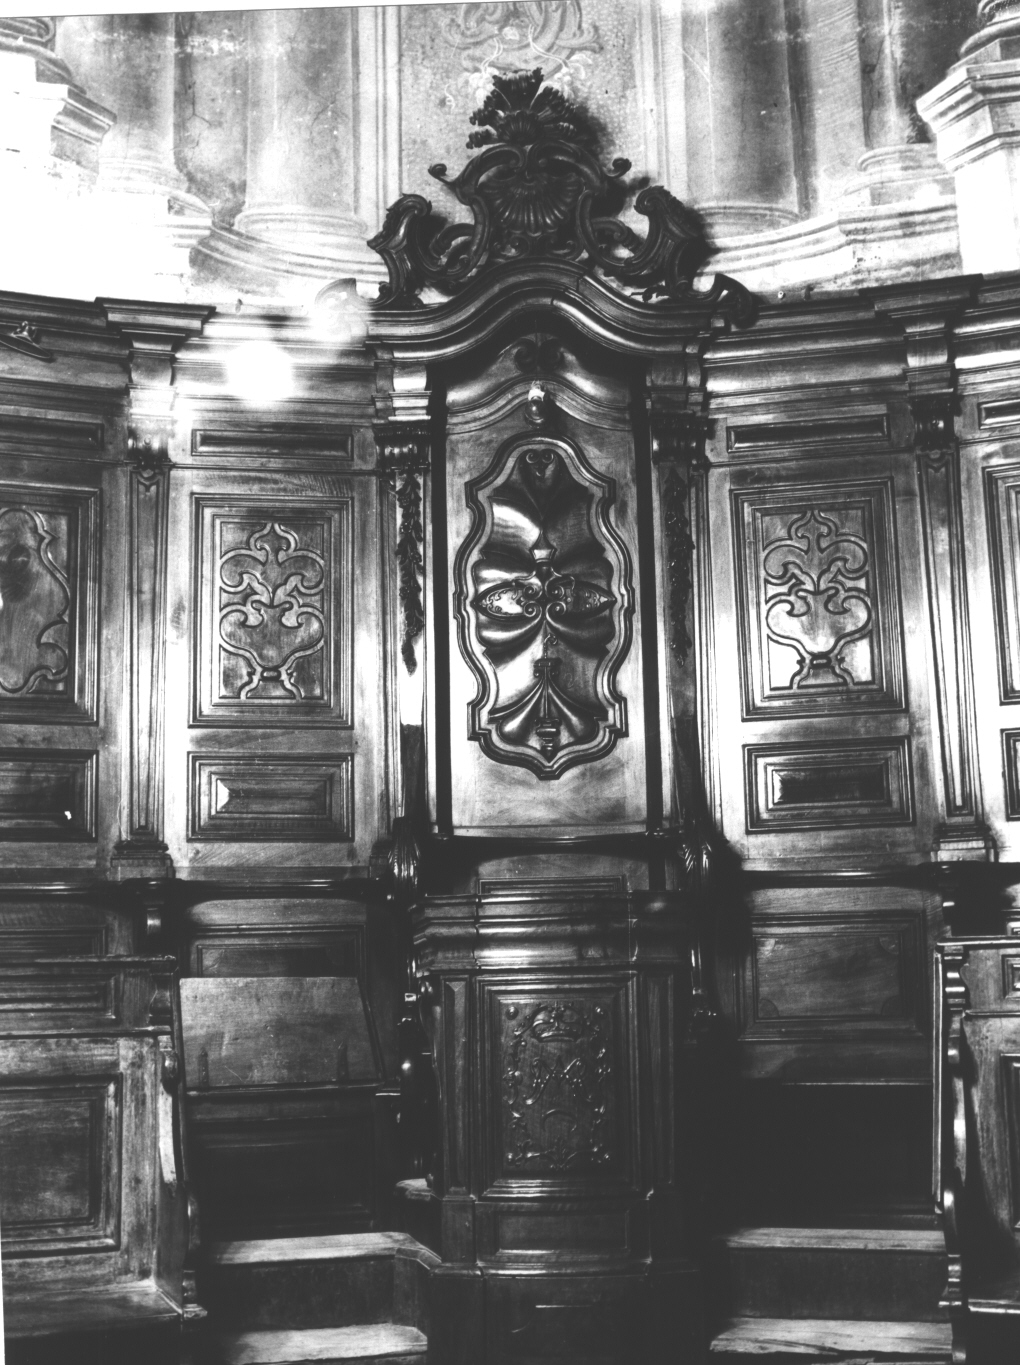 motivi decorativi vegetali/ motivi decorativi floreali (stalli del coro, insieme) di Sciaccaluga Giuseppe (sec. XVIII)